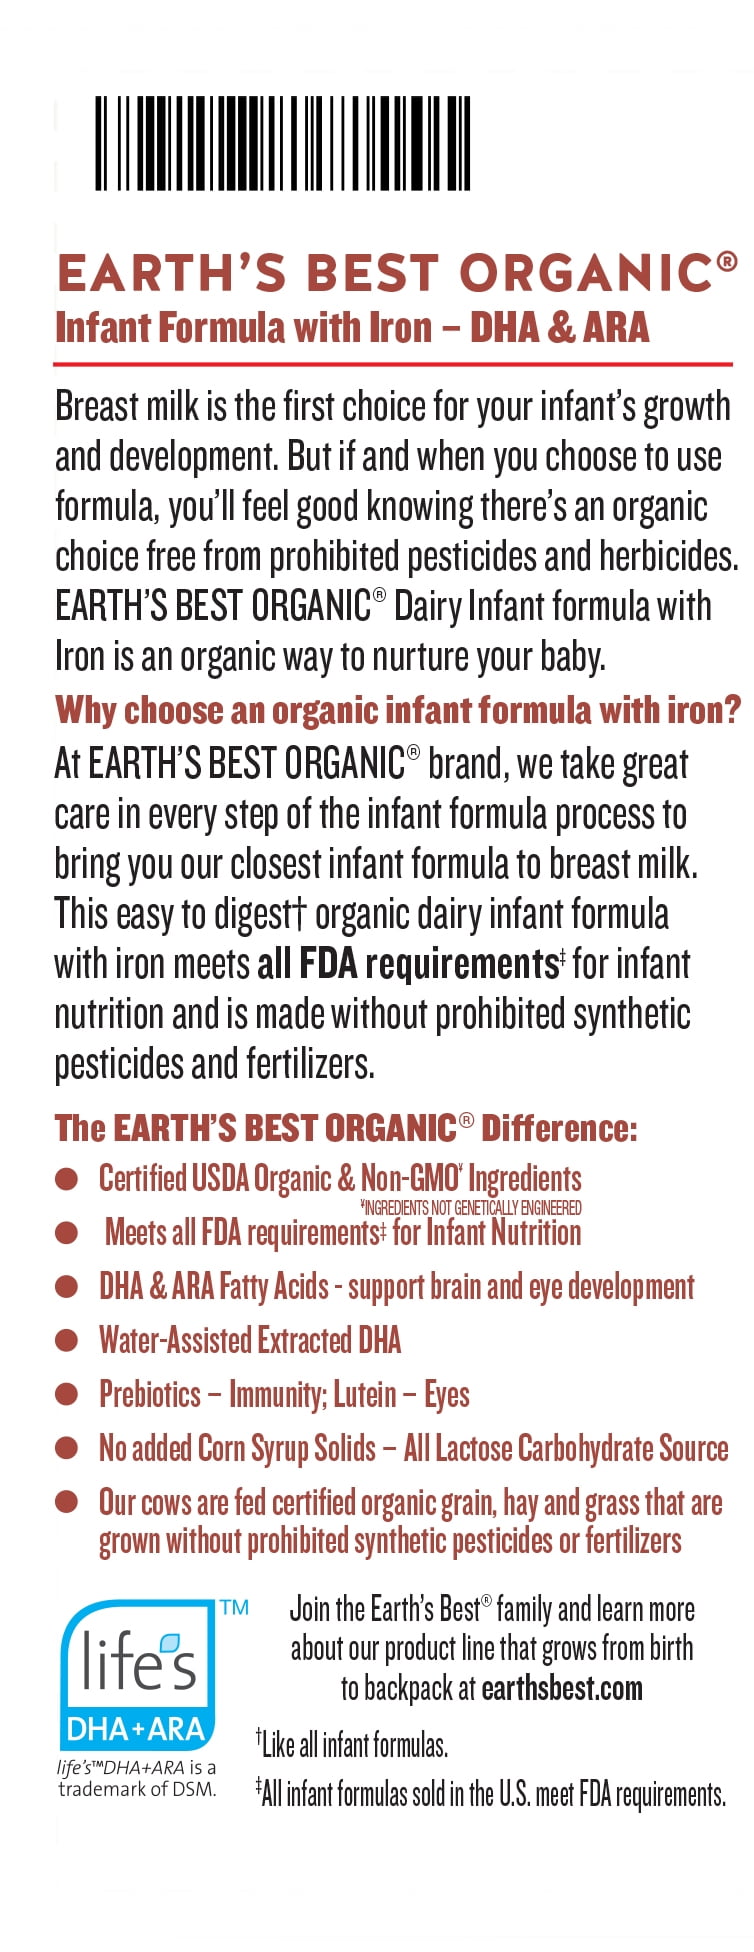 earth's best organic infant powder formula